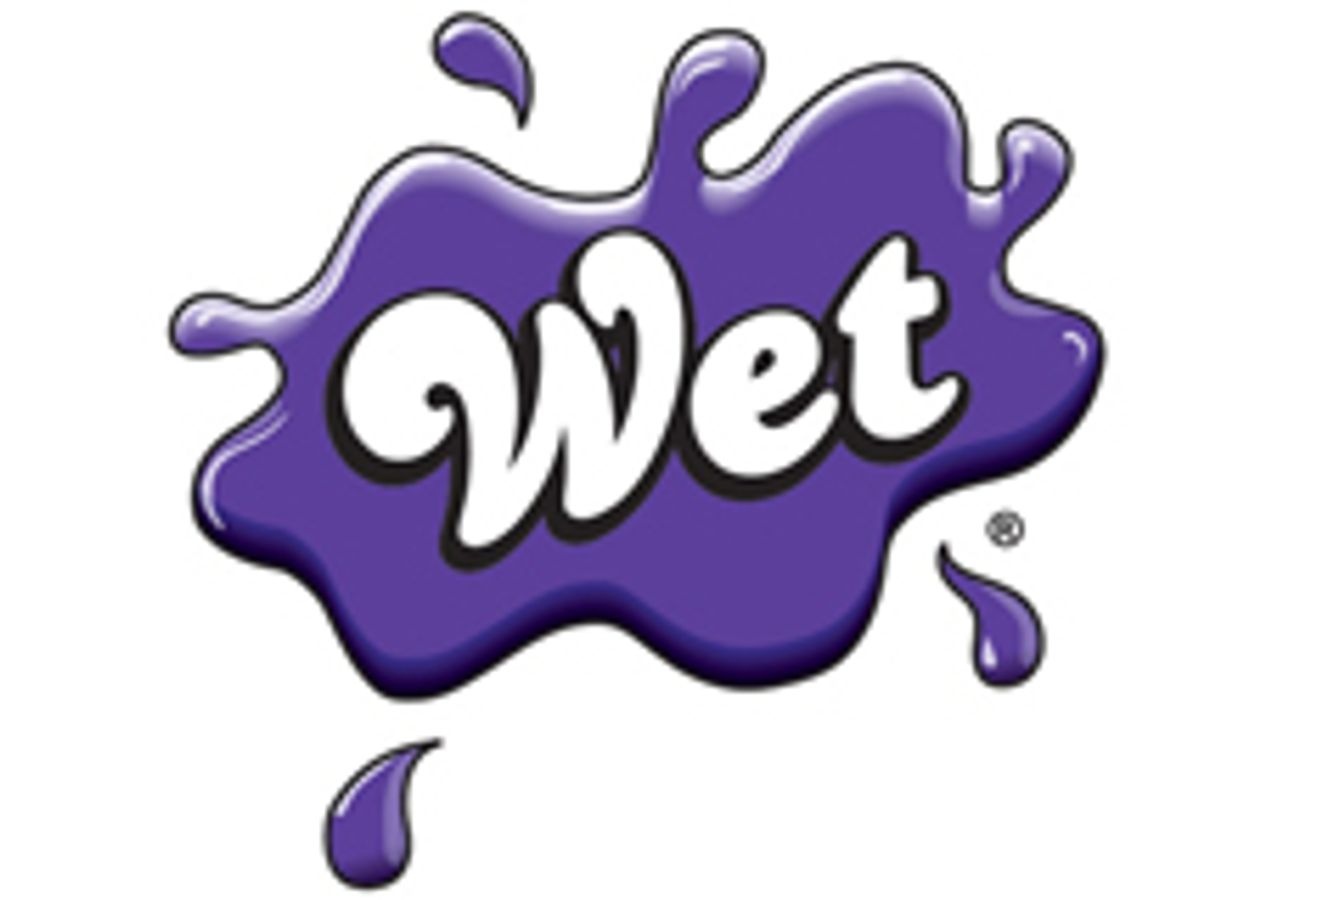 Wet International